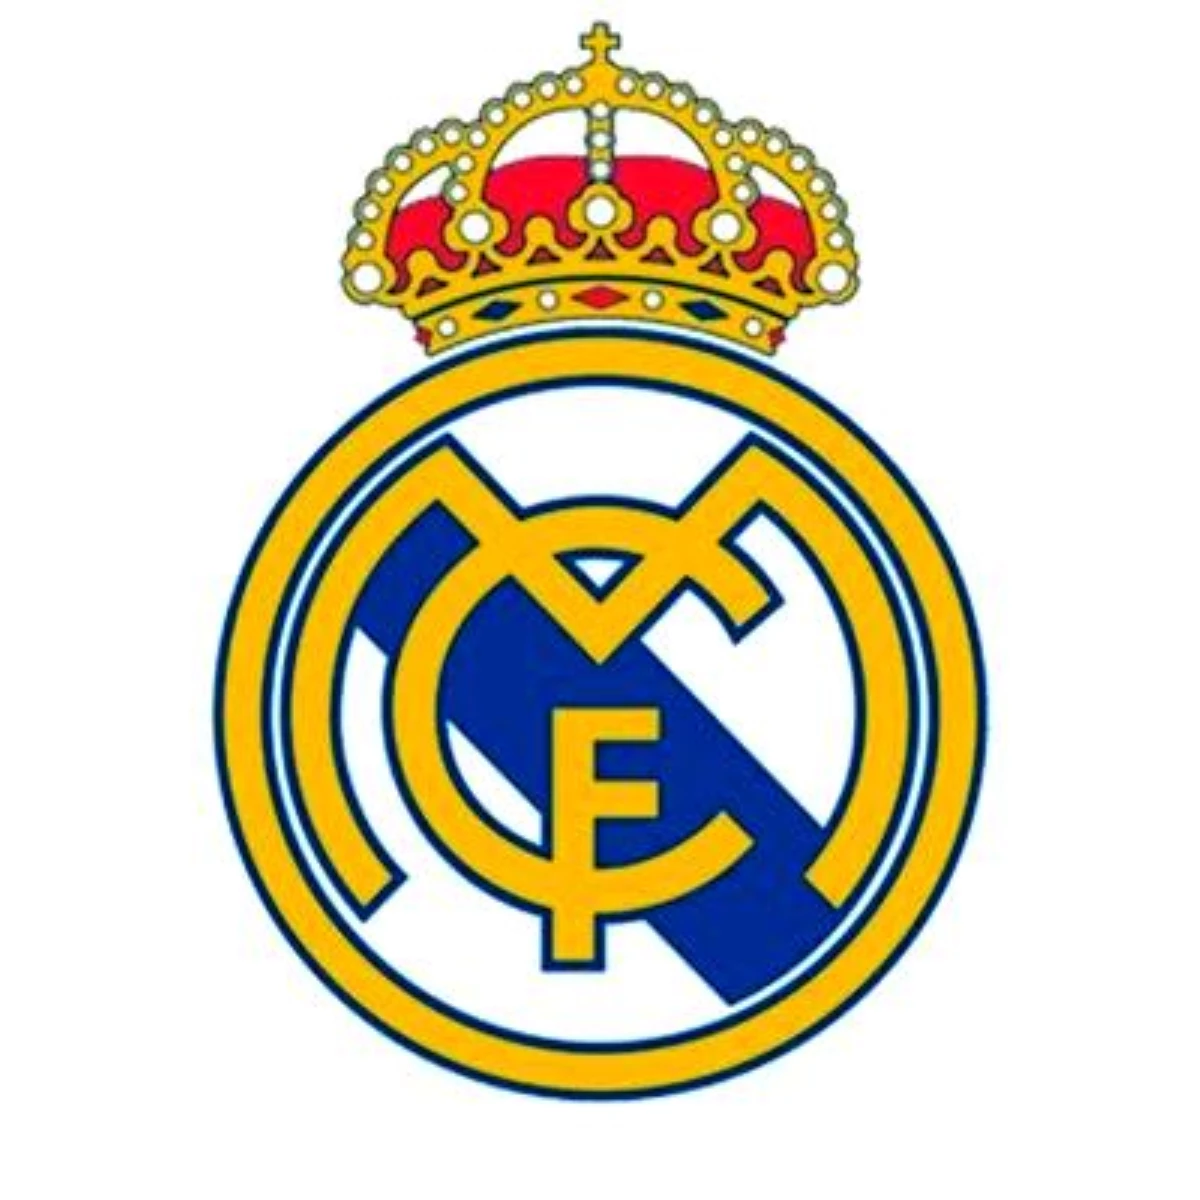 Real Madrid Genç Oyuncuları Çocuk İstismarı Suçlamasıyla Gözaltına Alındı